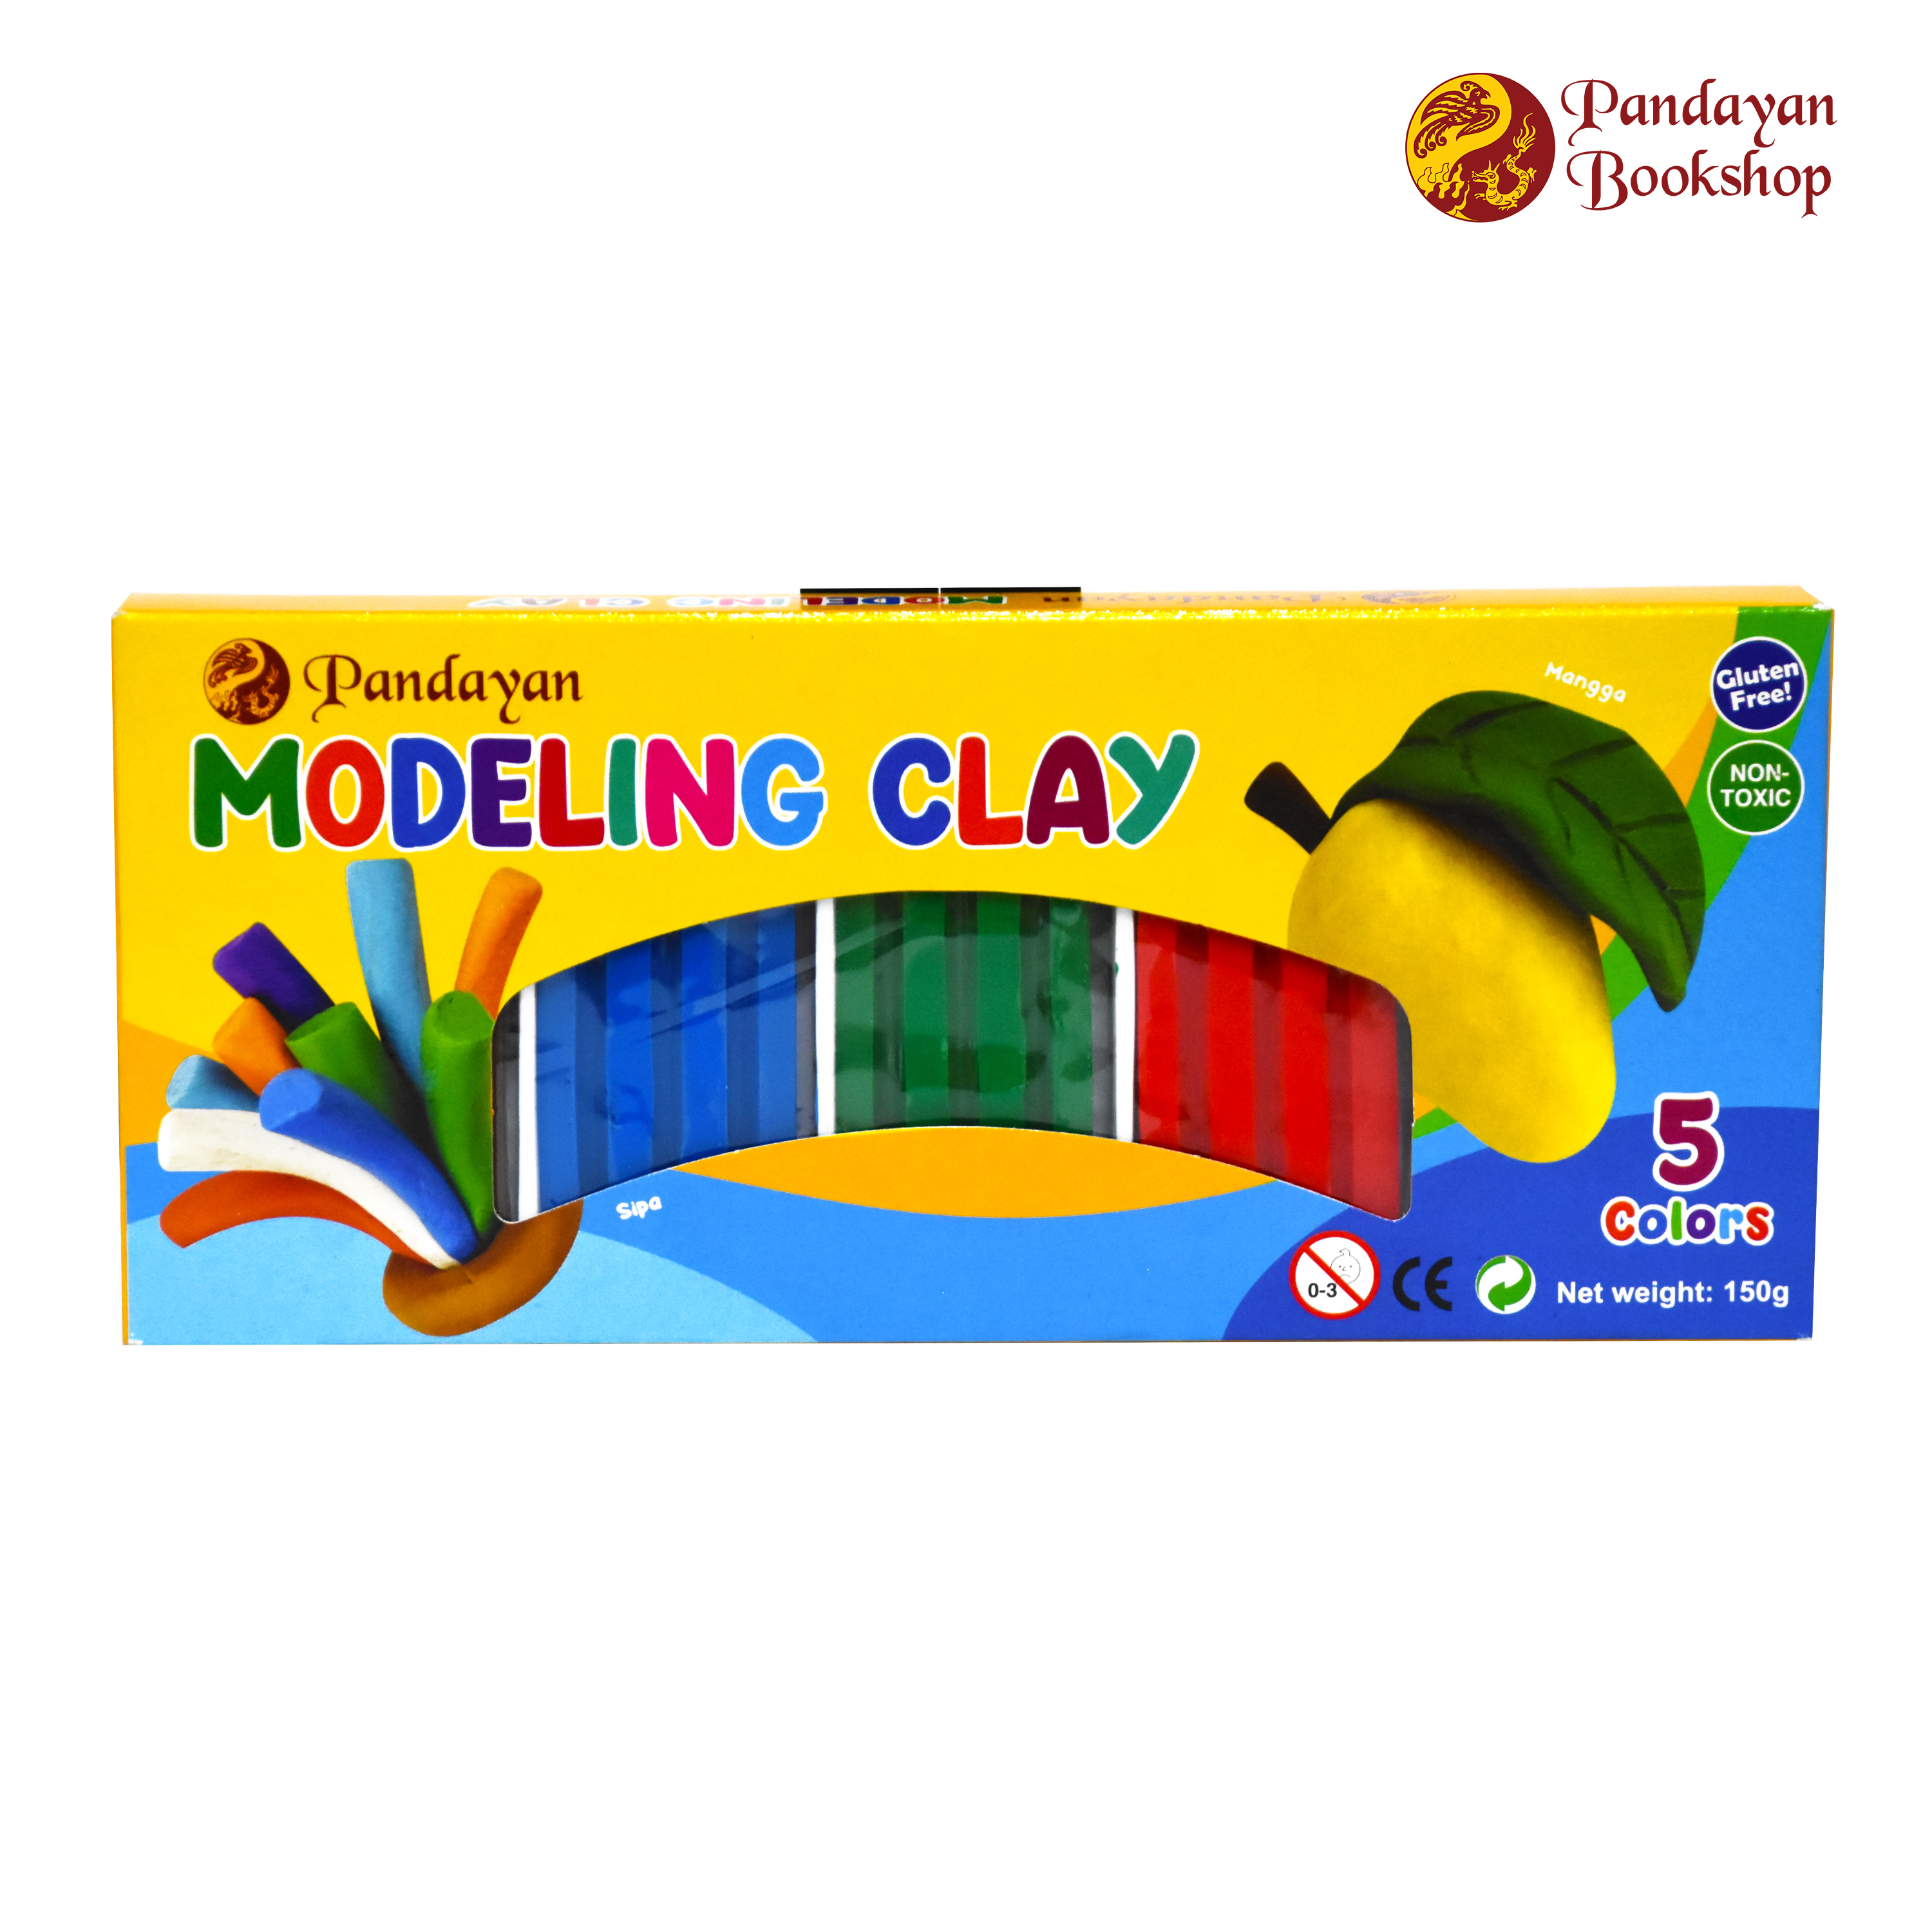 Pandayan Modeling Clay 5s 150g